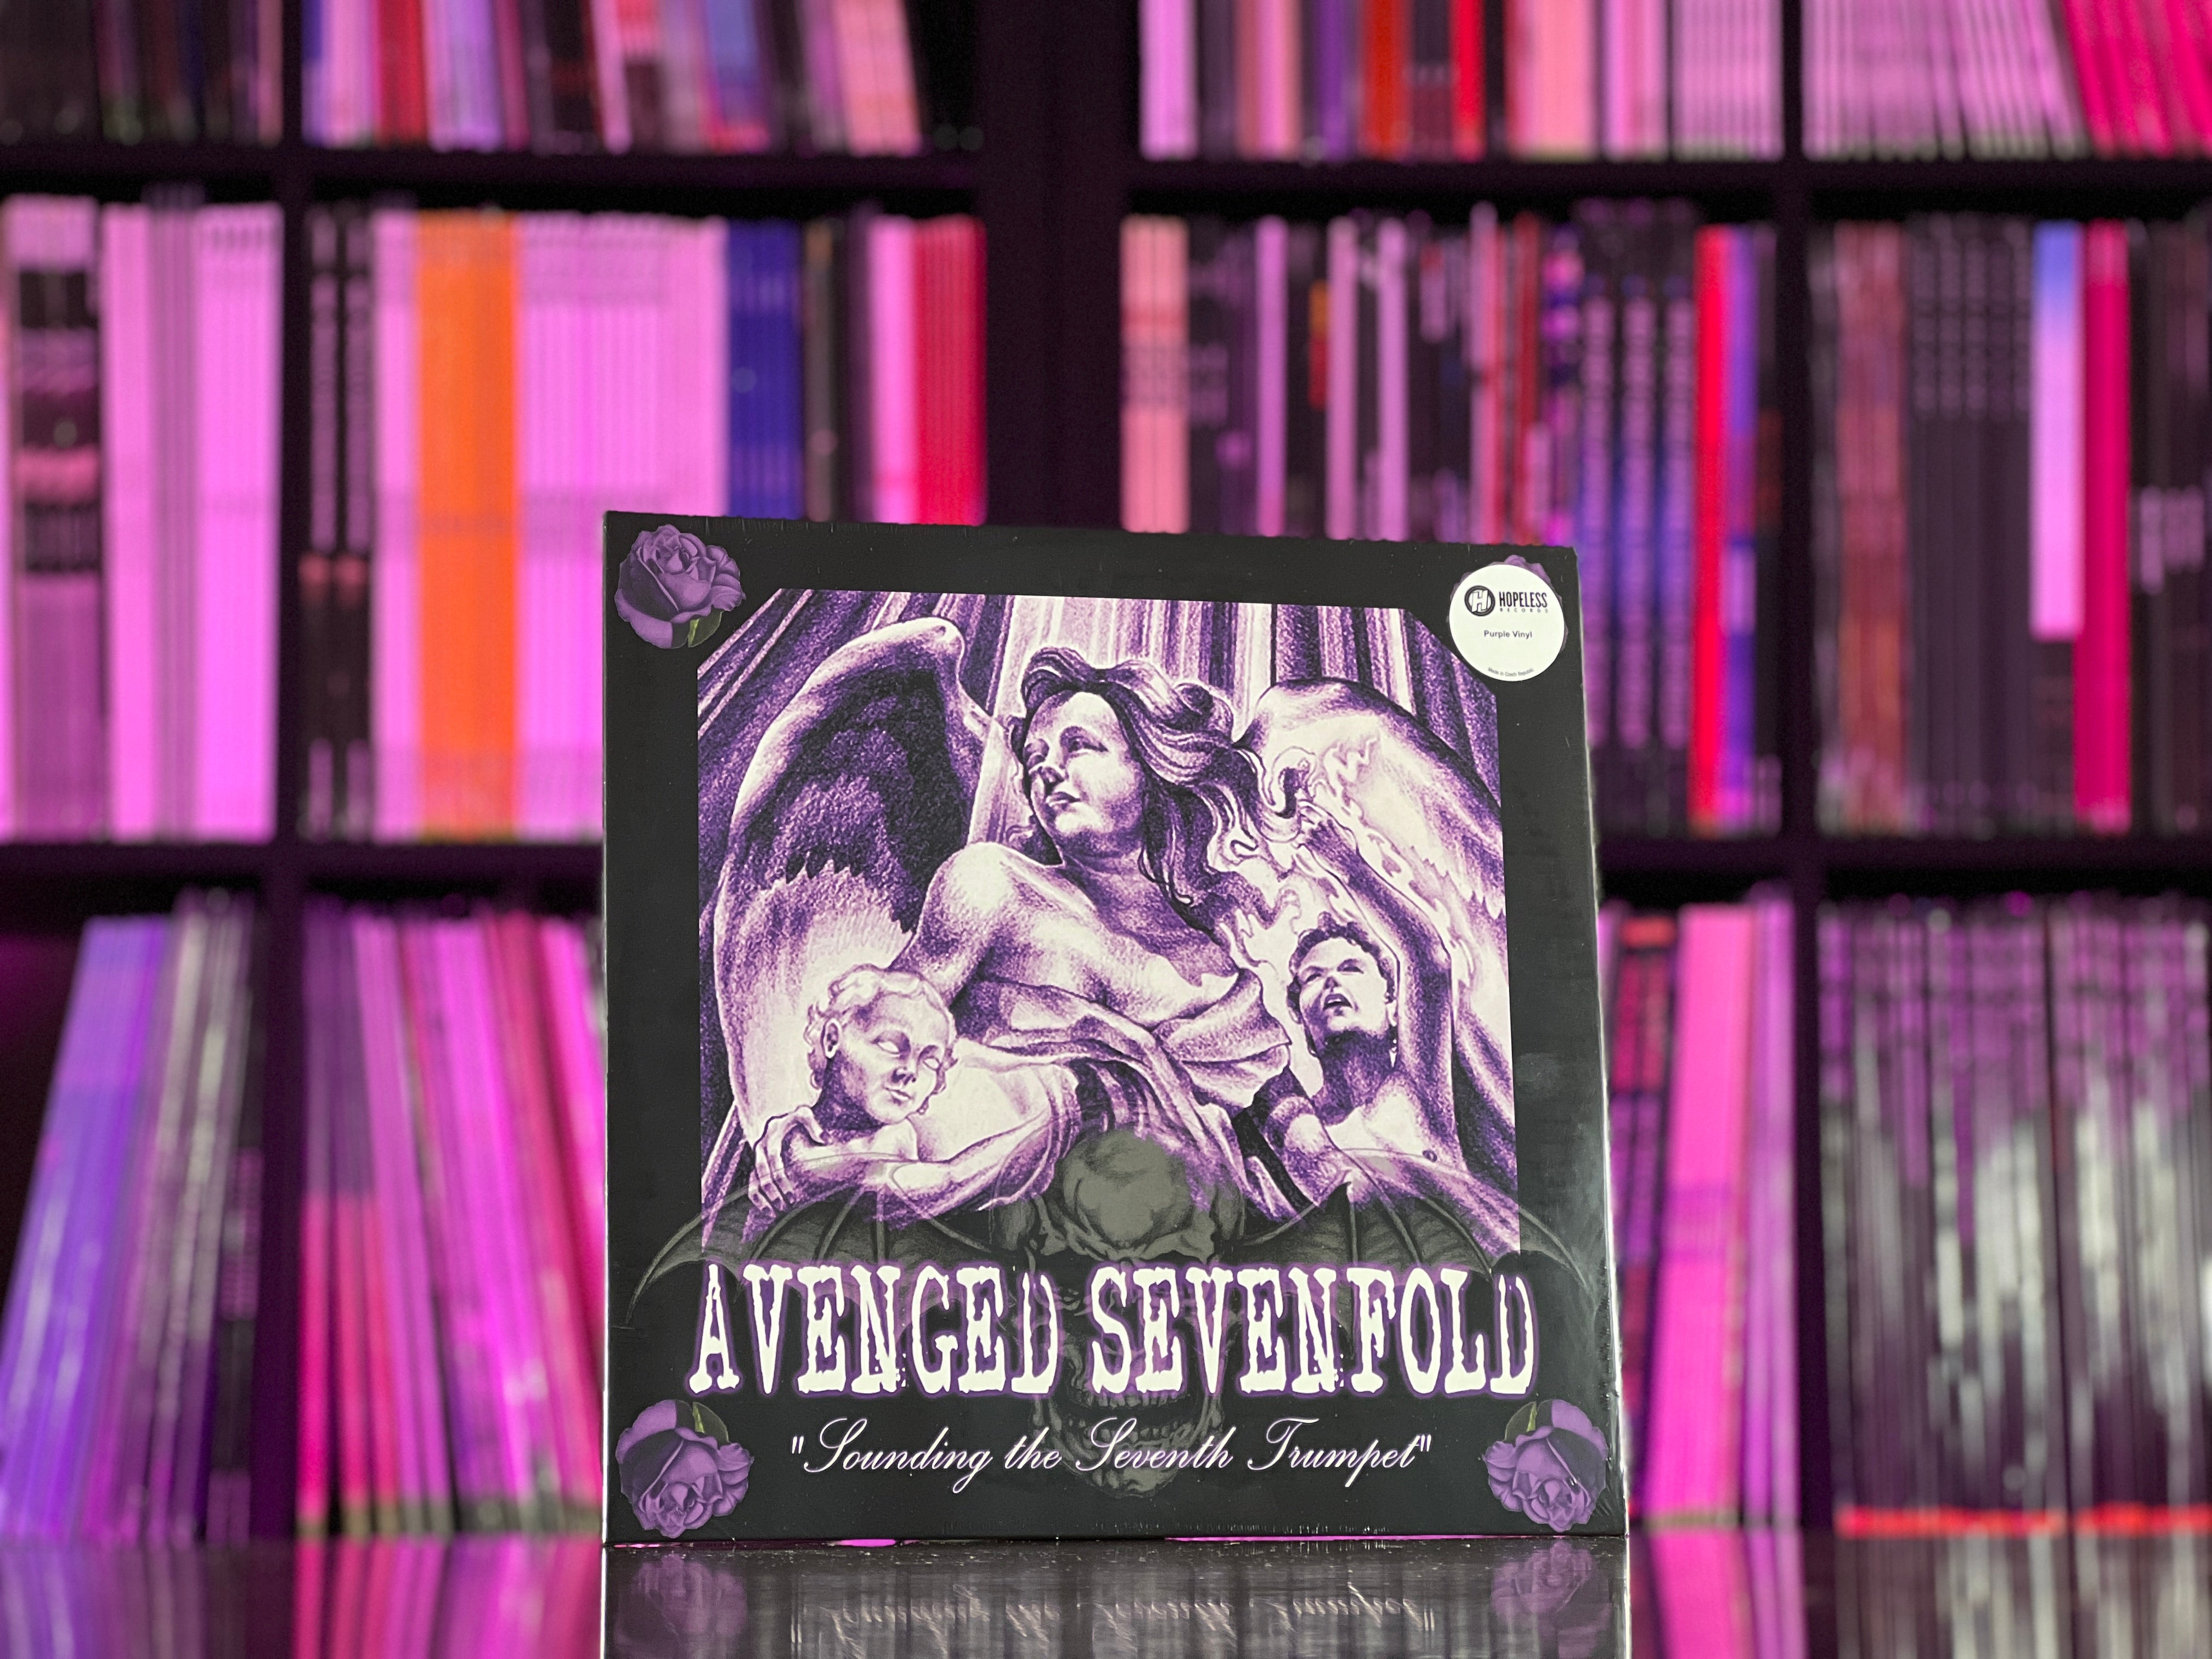 Avenged Sevenfold – Álbum de Avenged Sevenfold